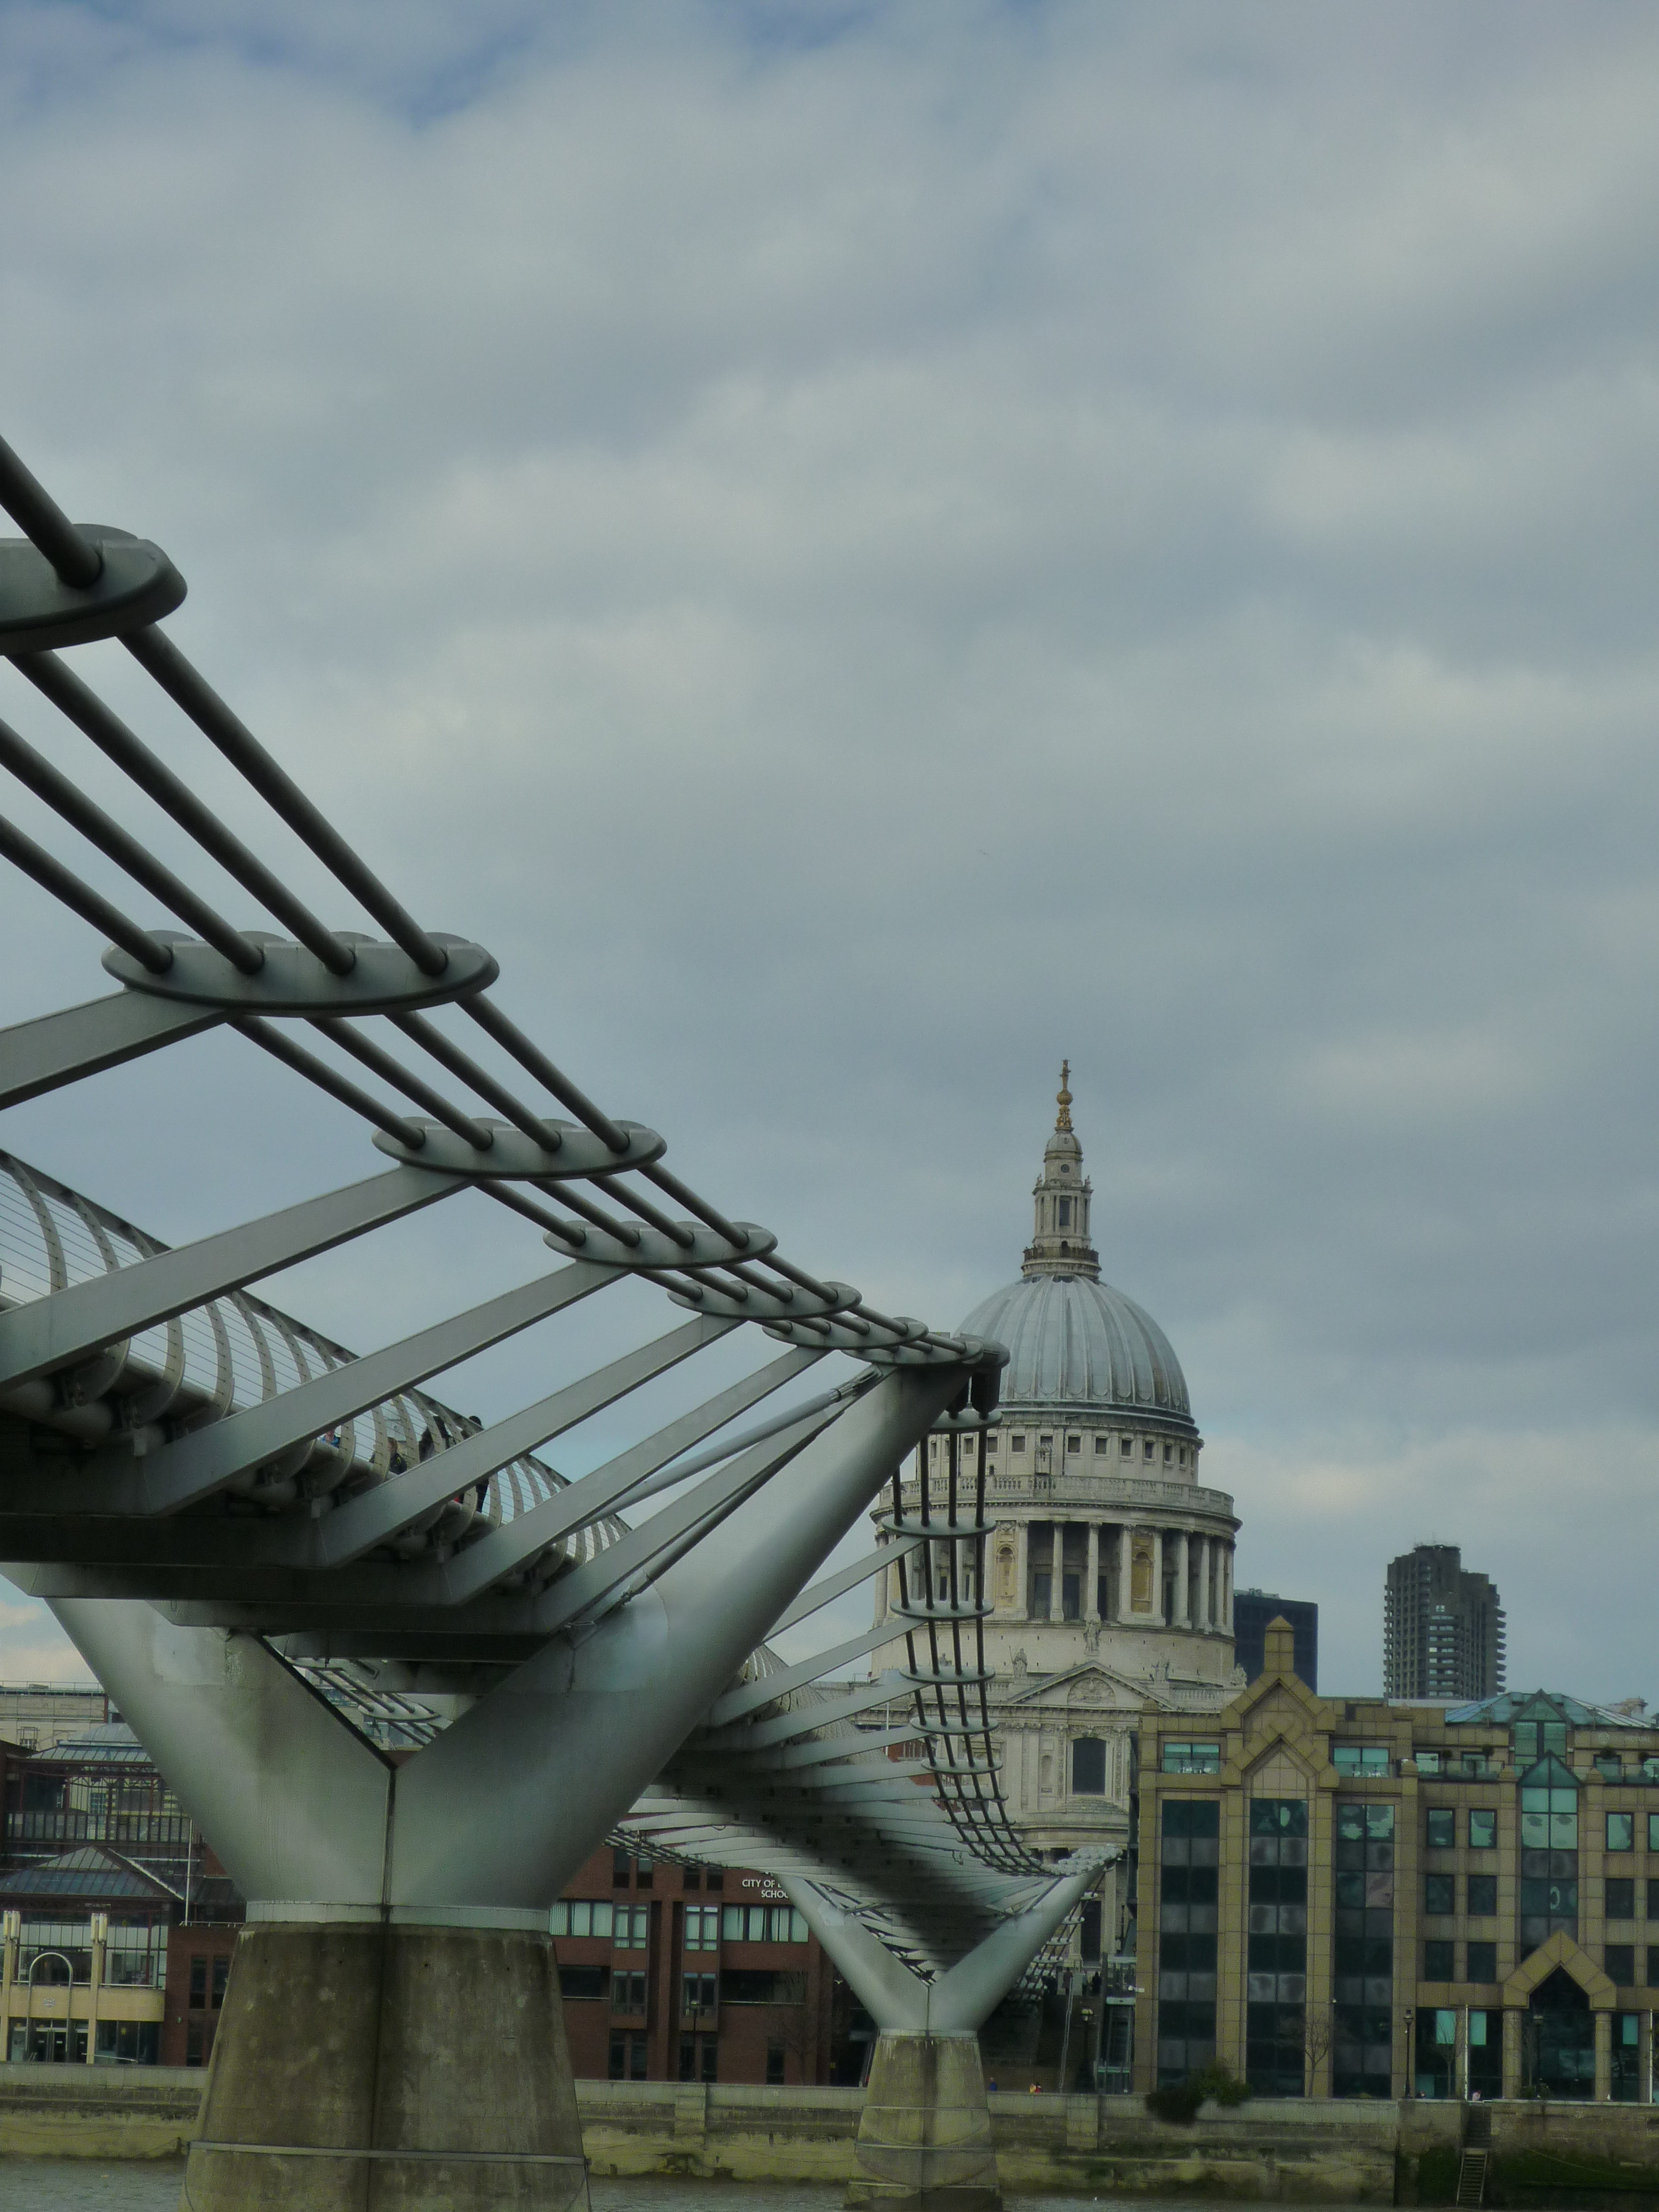 London study tour - Millenium Bridge